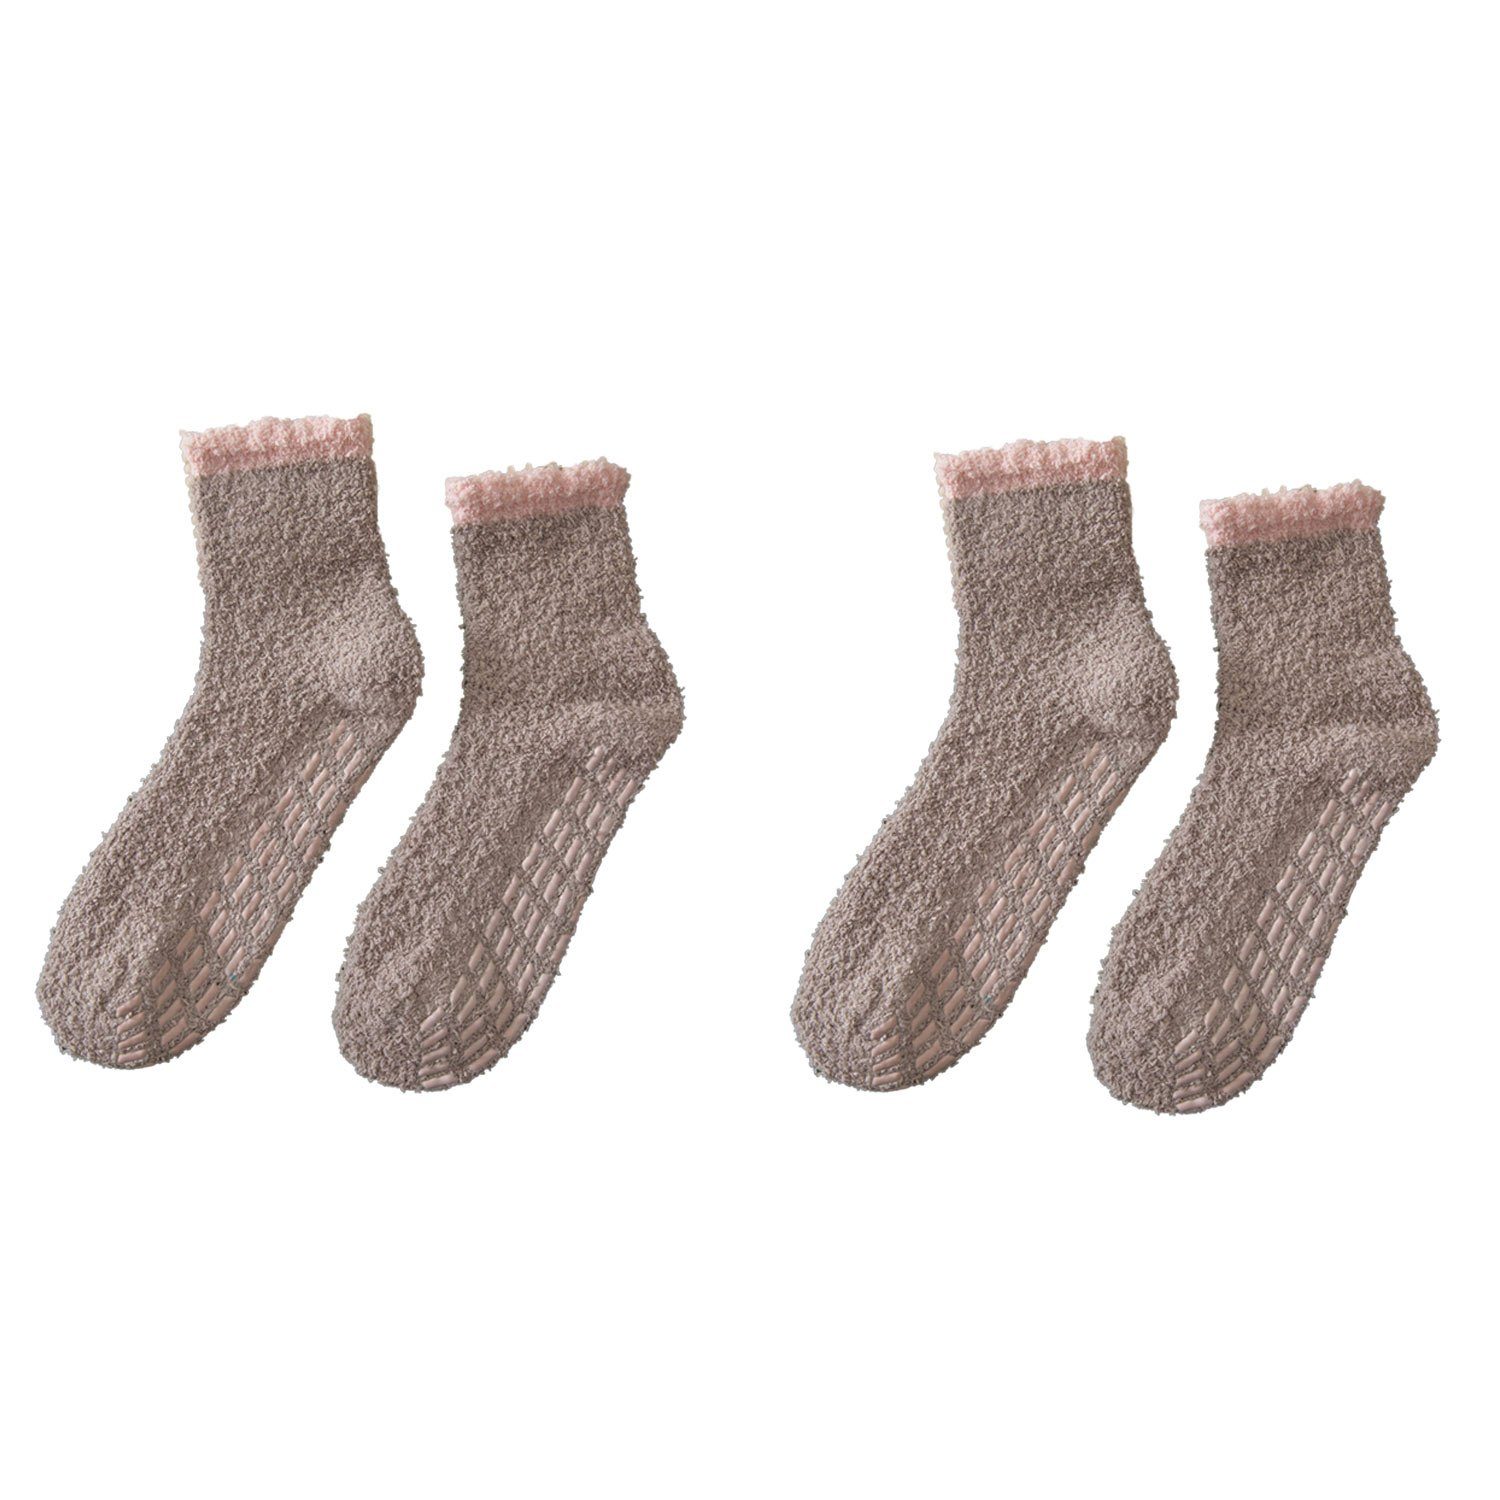 MAGICSHE Langsocken 2 Paare für Winter weiche flauschige Socken Rutschfeste und warme Fleece Socken khaki